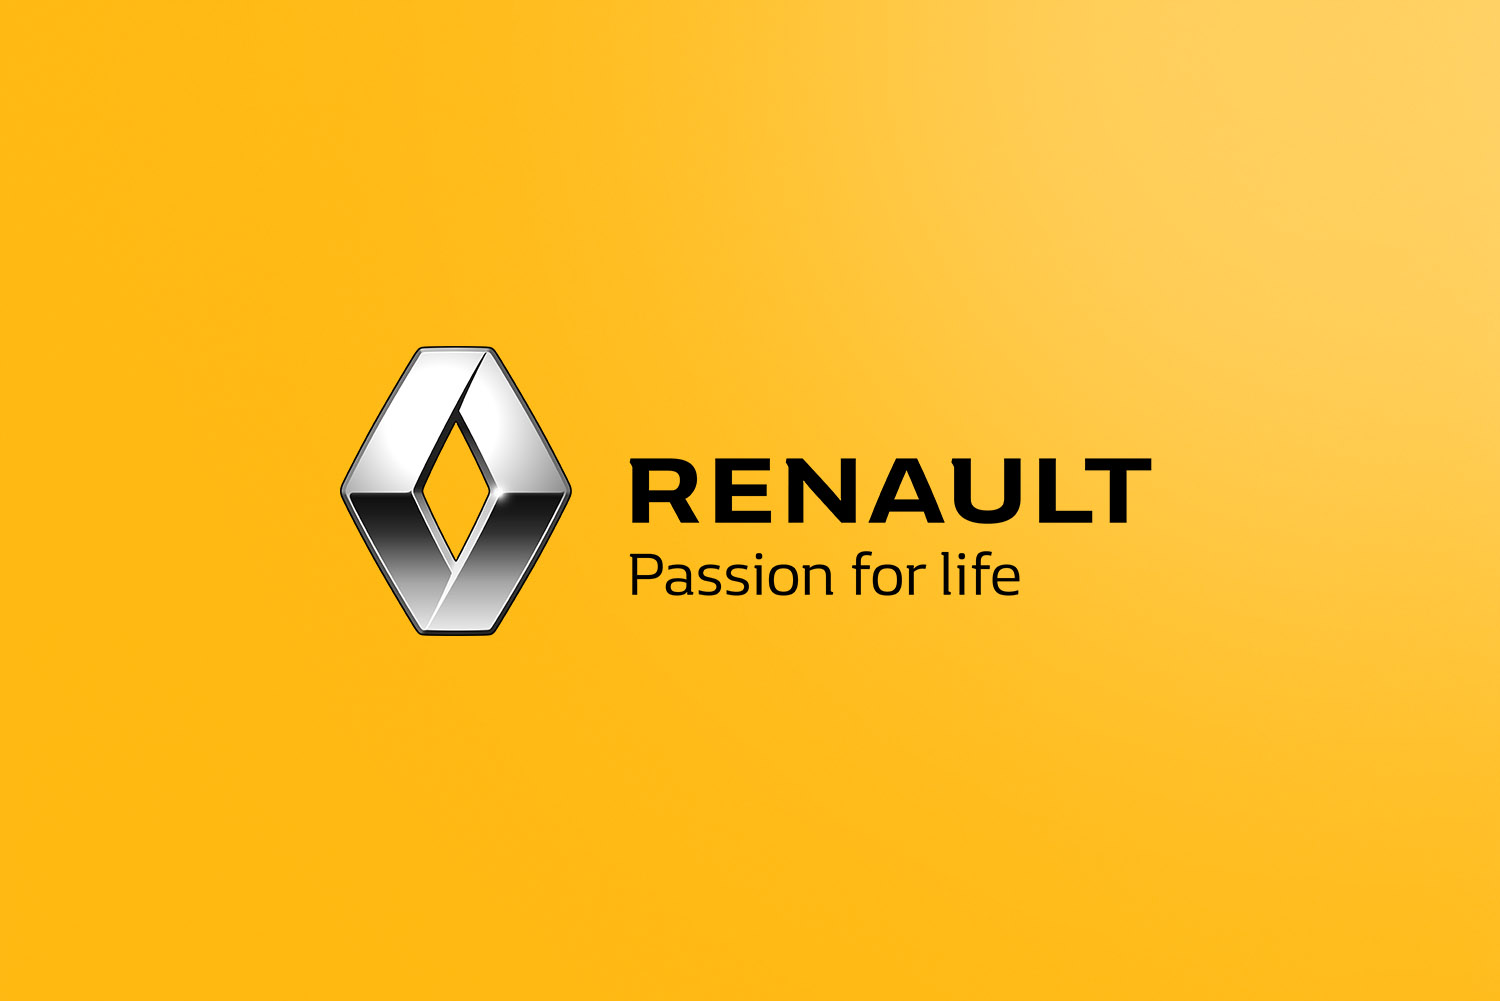 Renault group